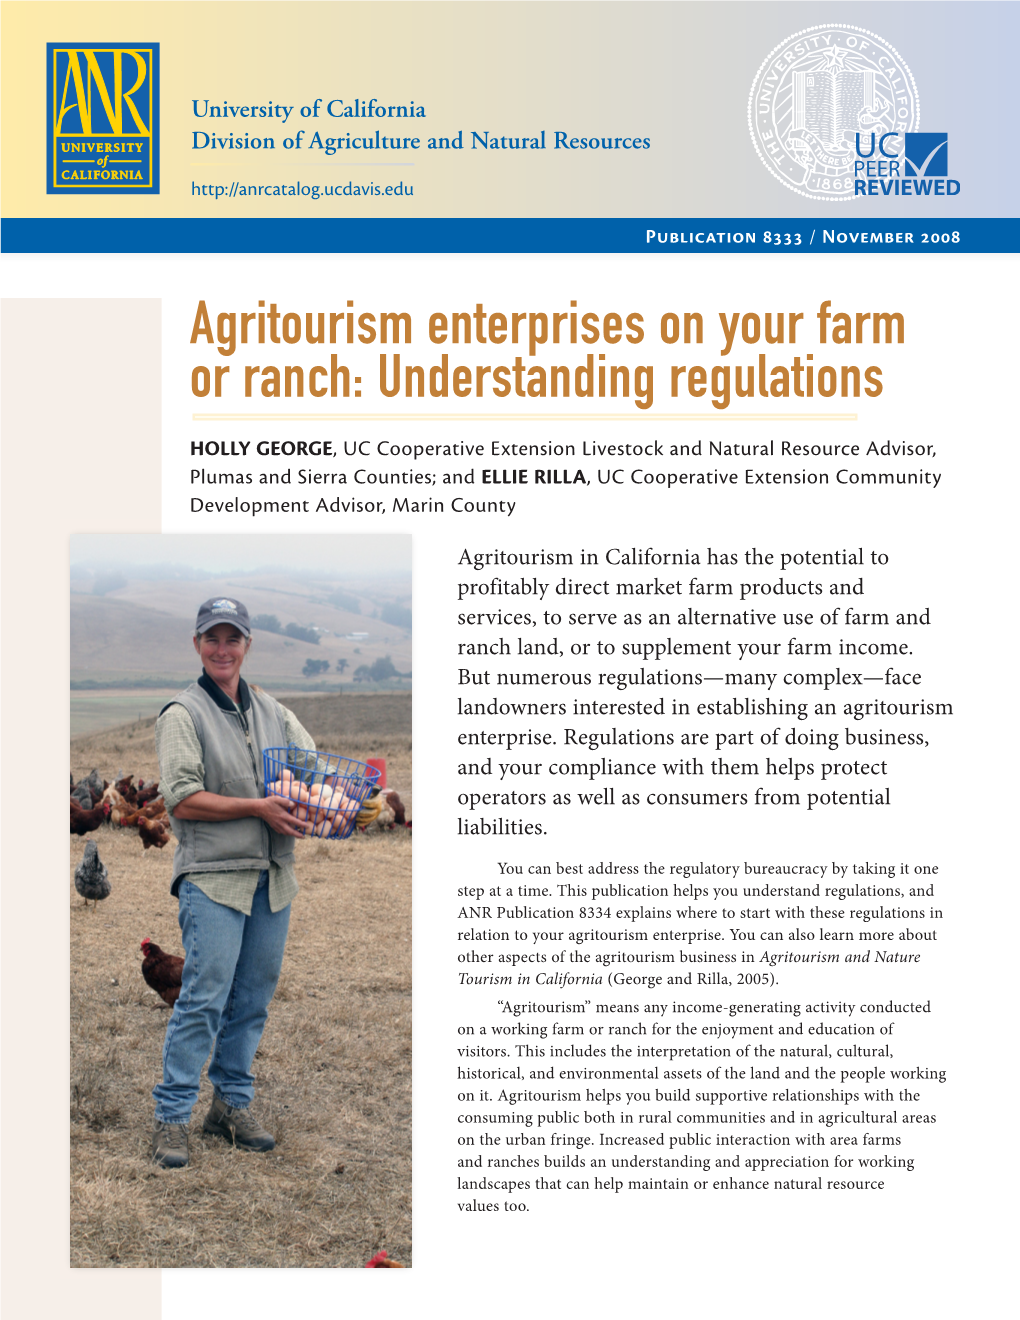 Agritourism Enterprises on Your Farm Or Ranch: Understanding Regulations